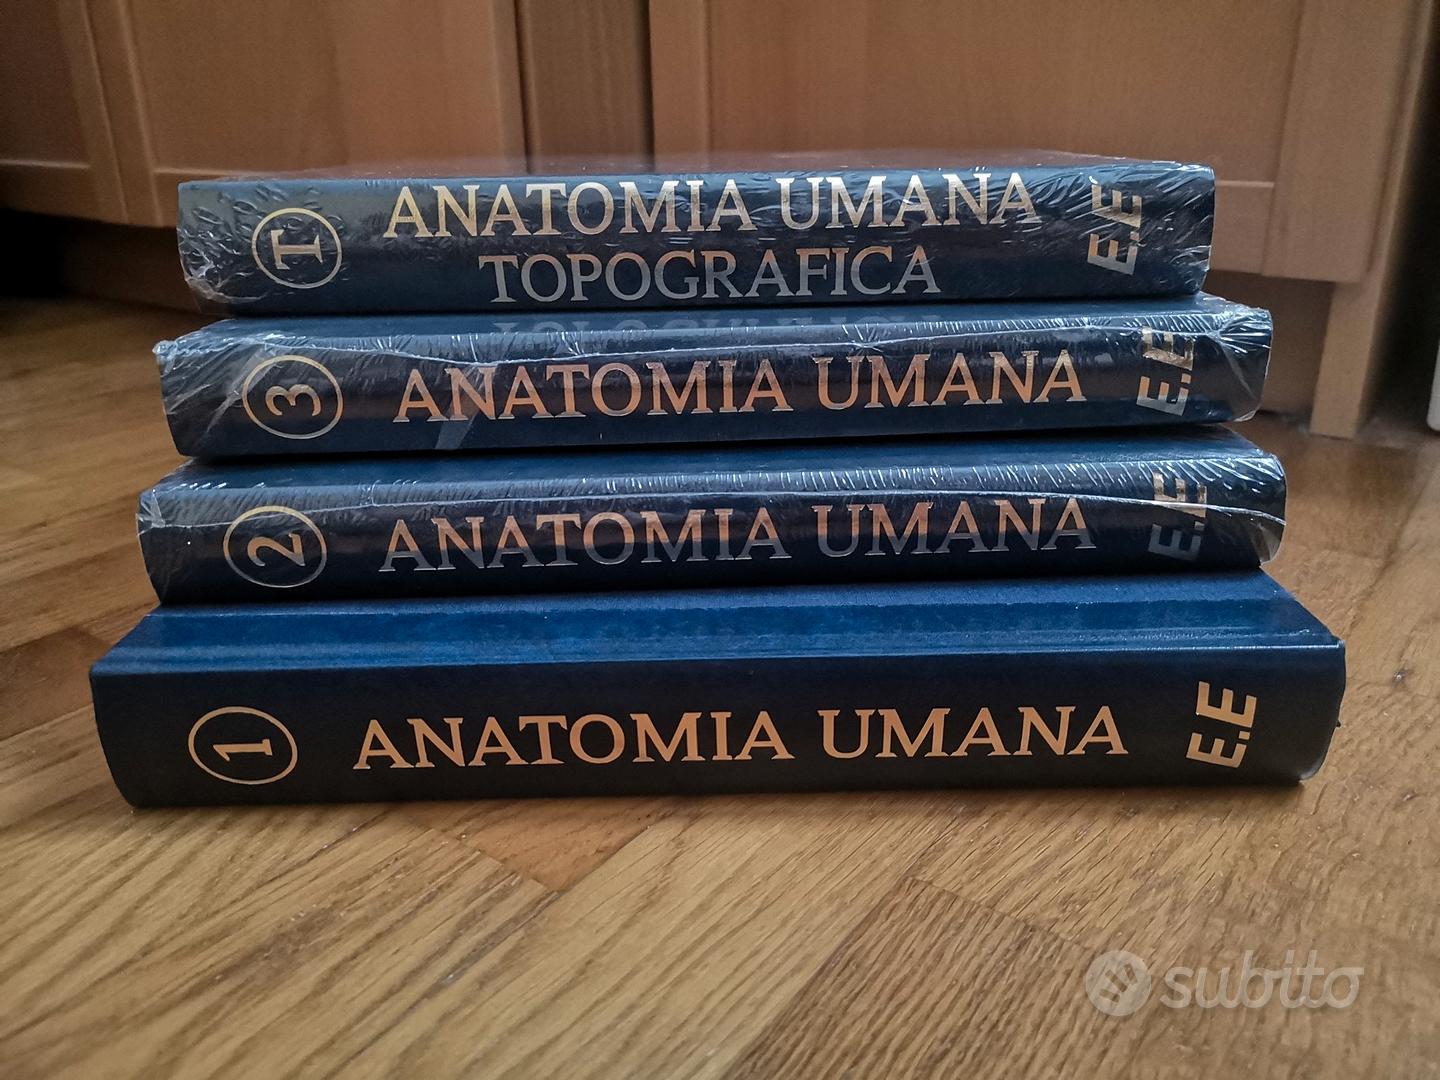 Trattato di Anatomia Umana Anastasi - Anatomy Bag Plus